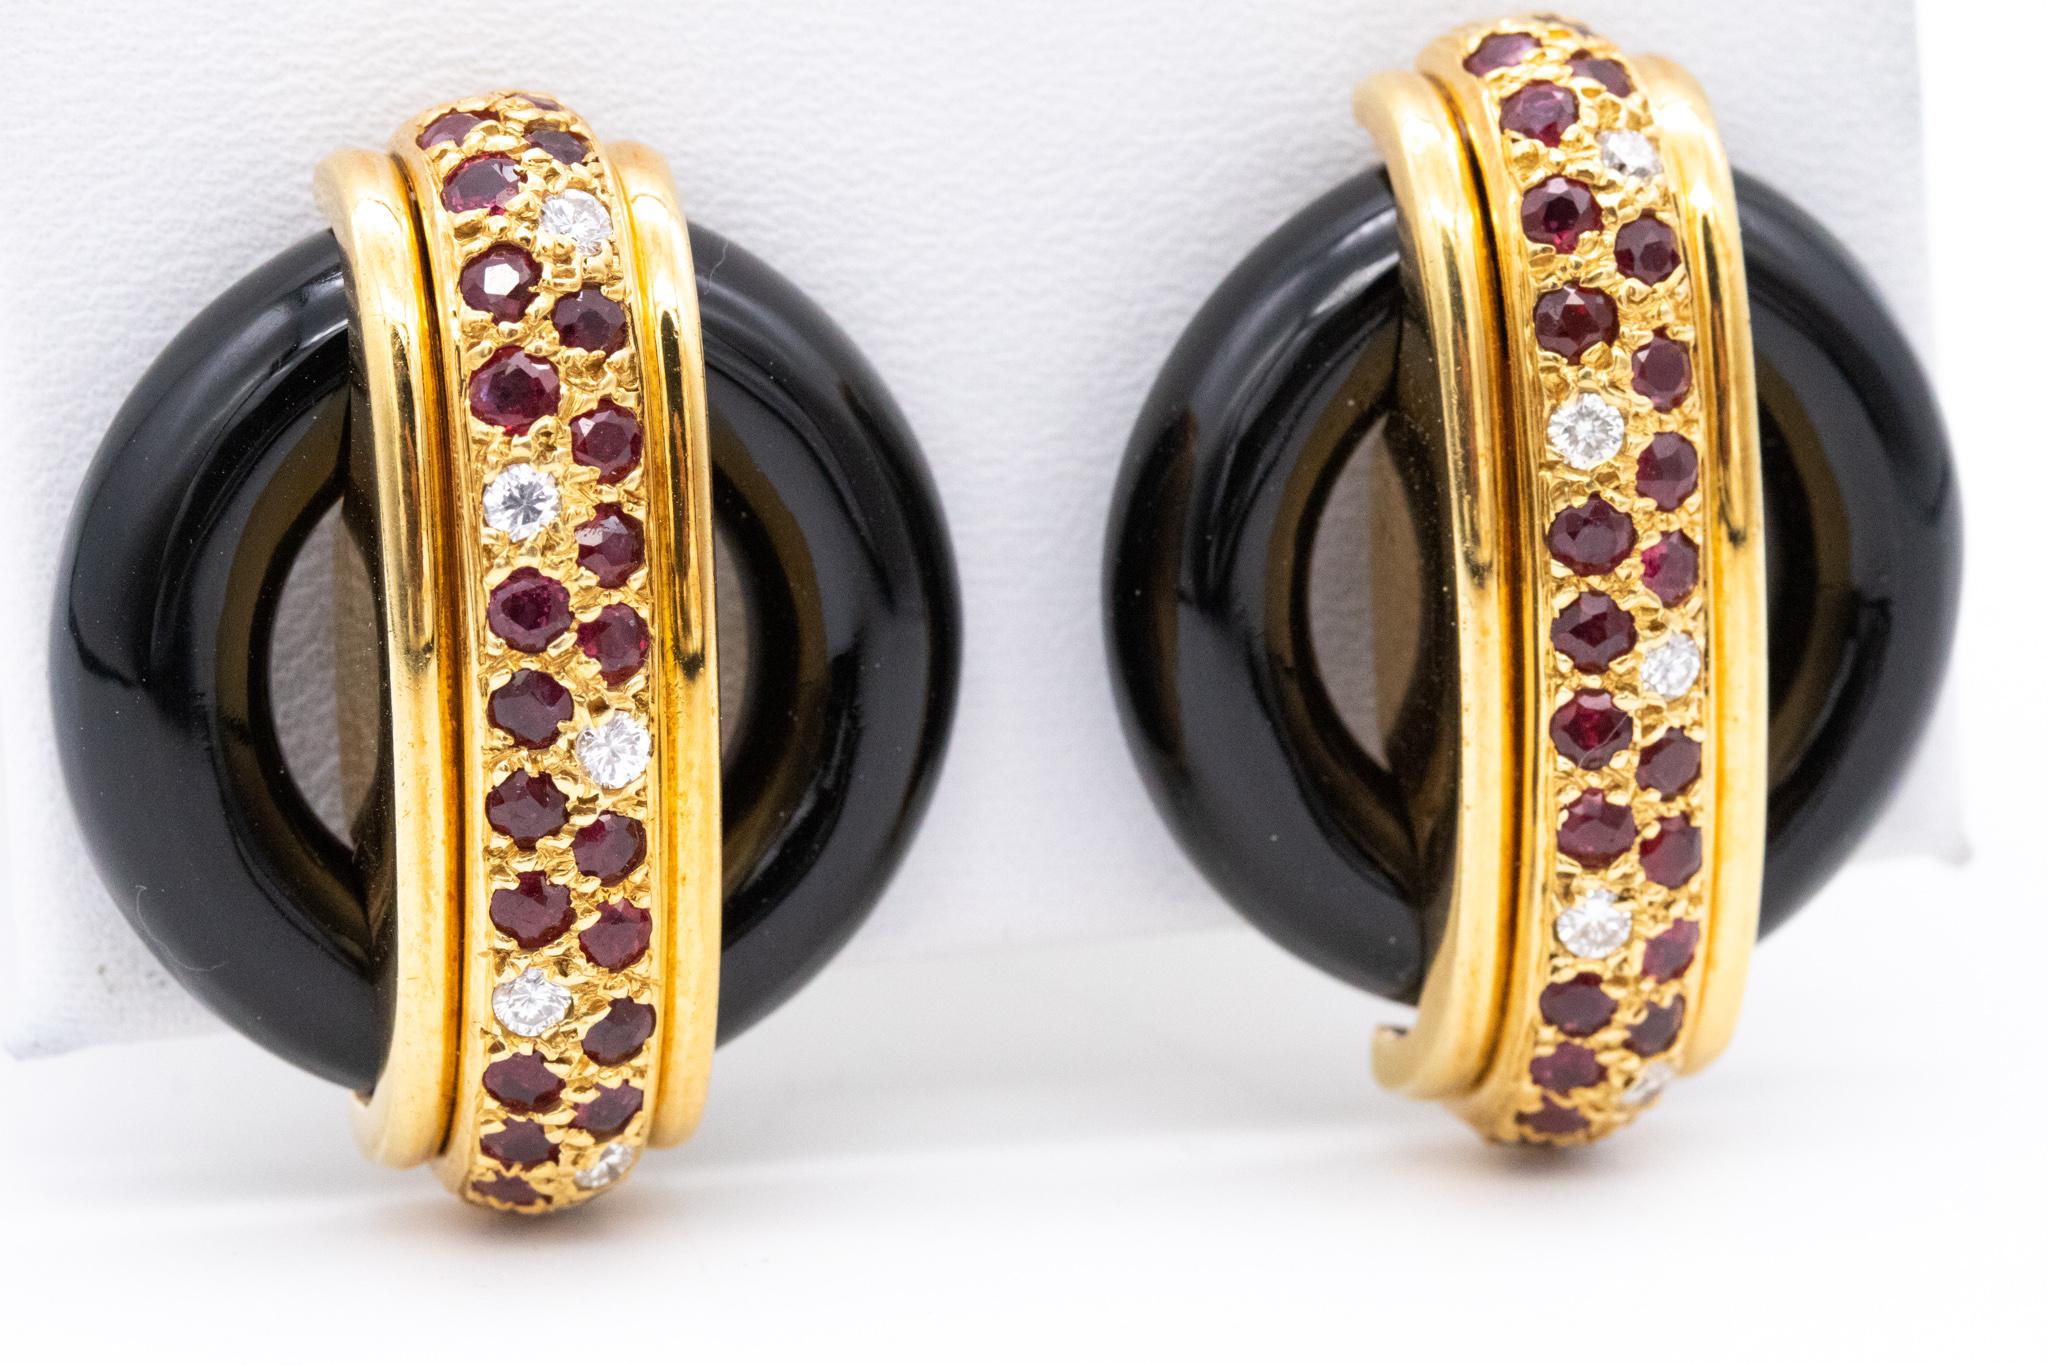 Cartier 1974 Aldo Cipullo Clip Earrings 18Kt Gold with 2.95 Ctw Diamonds Rubies 2